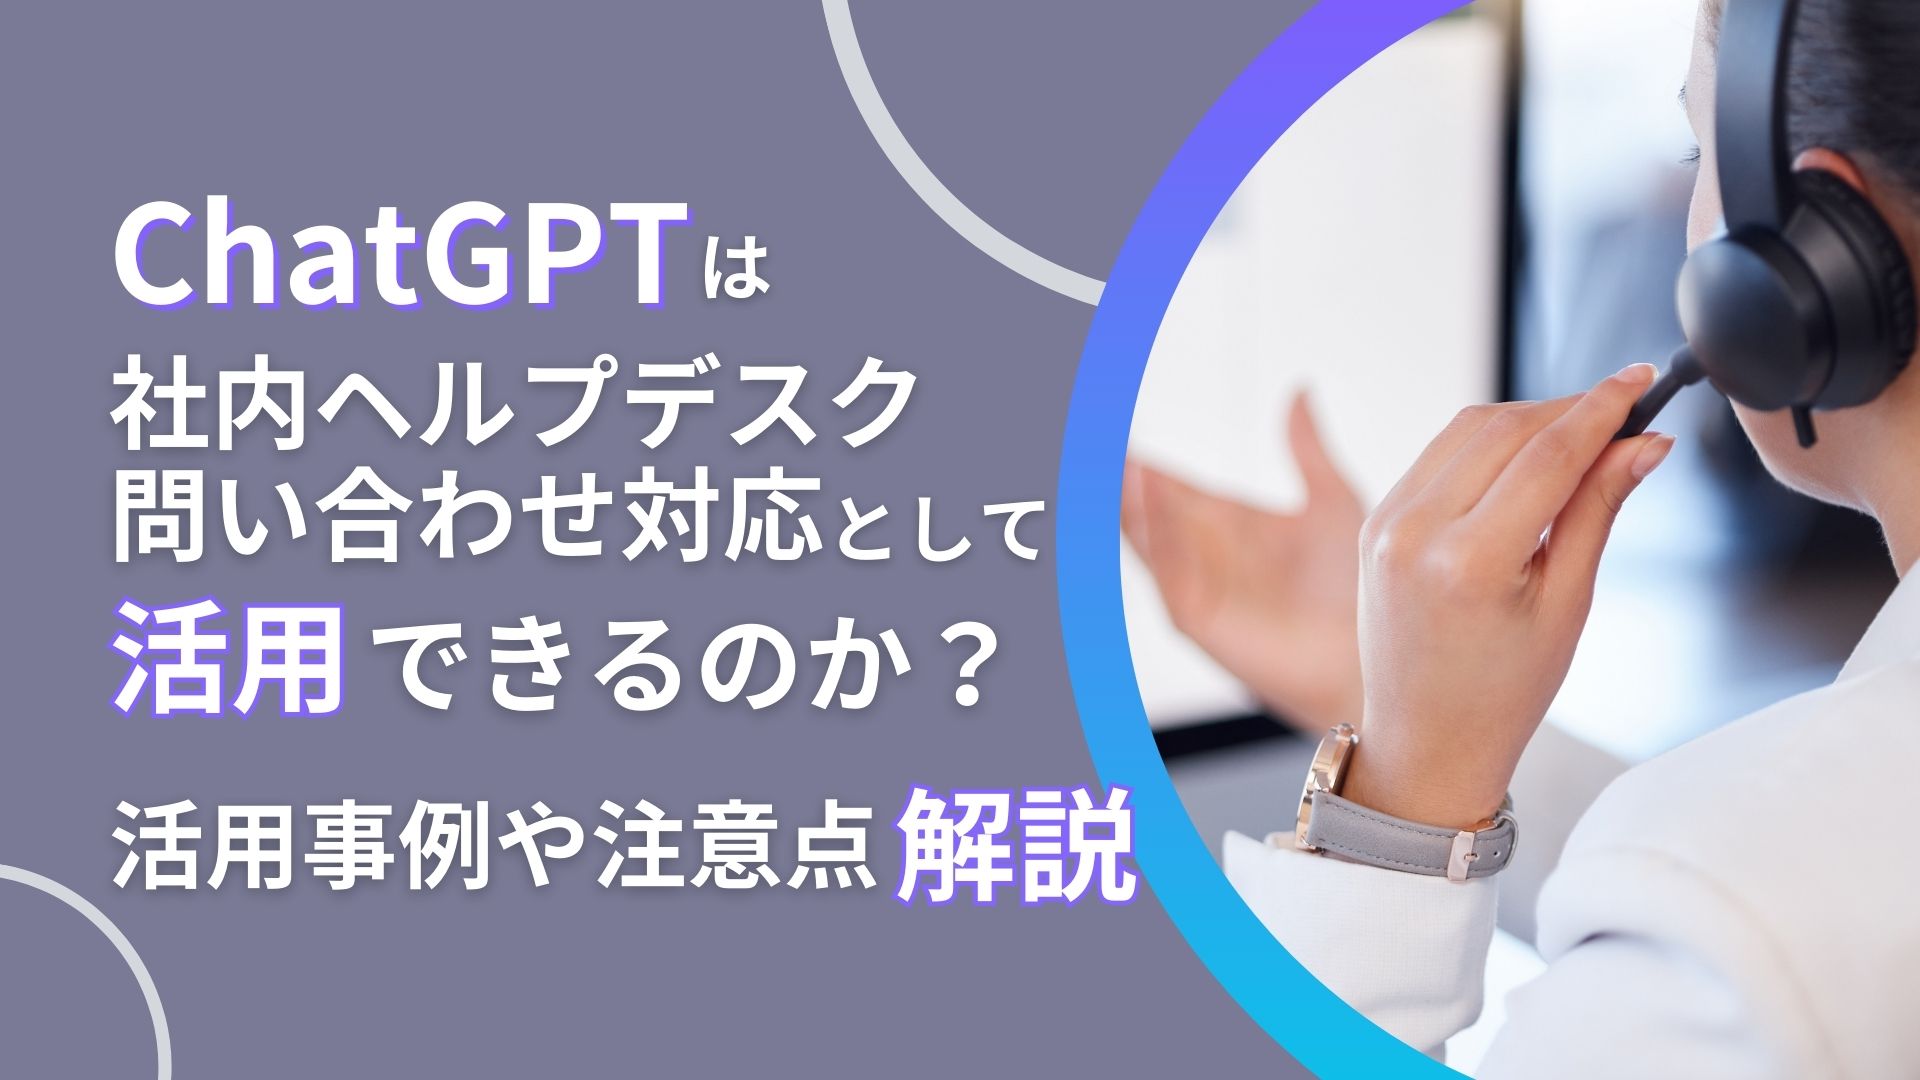 ChatGPT ヘルプデスク・問い合わせ 解説